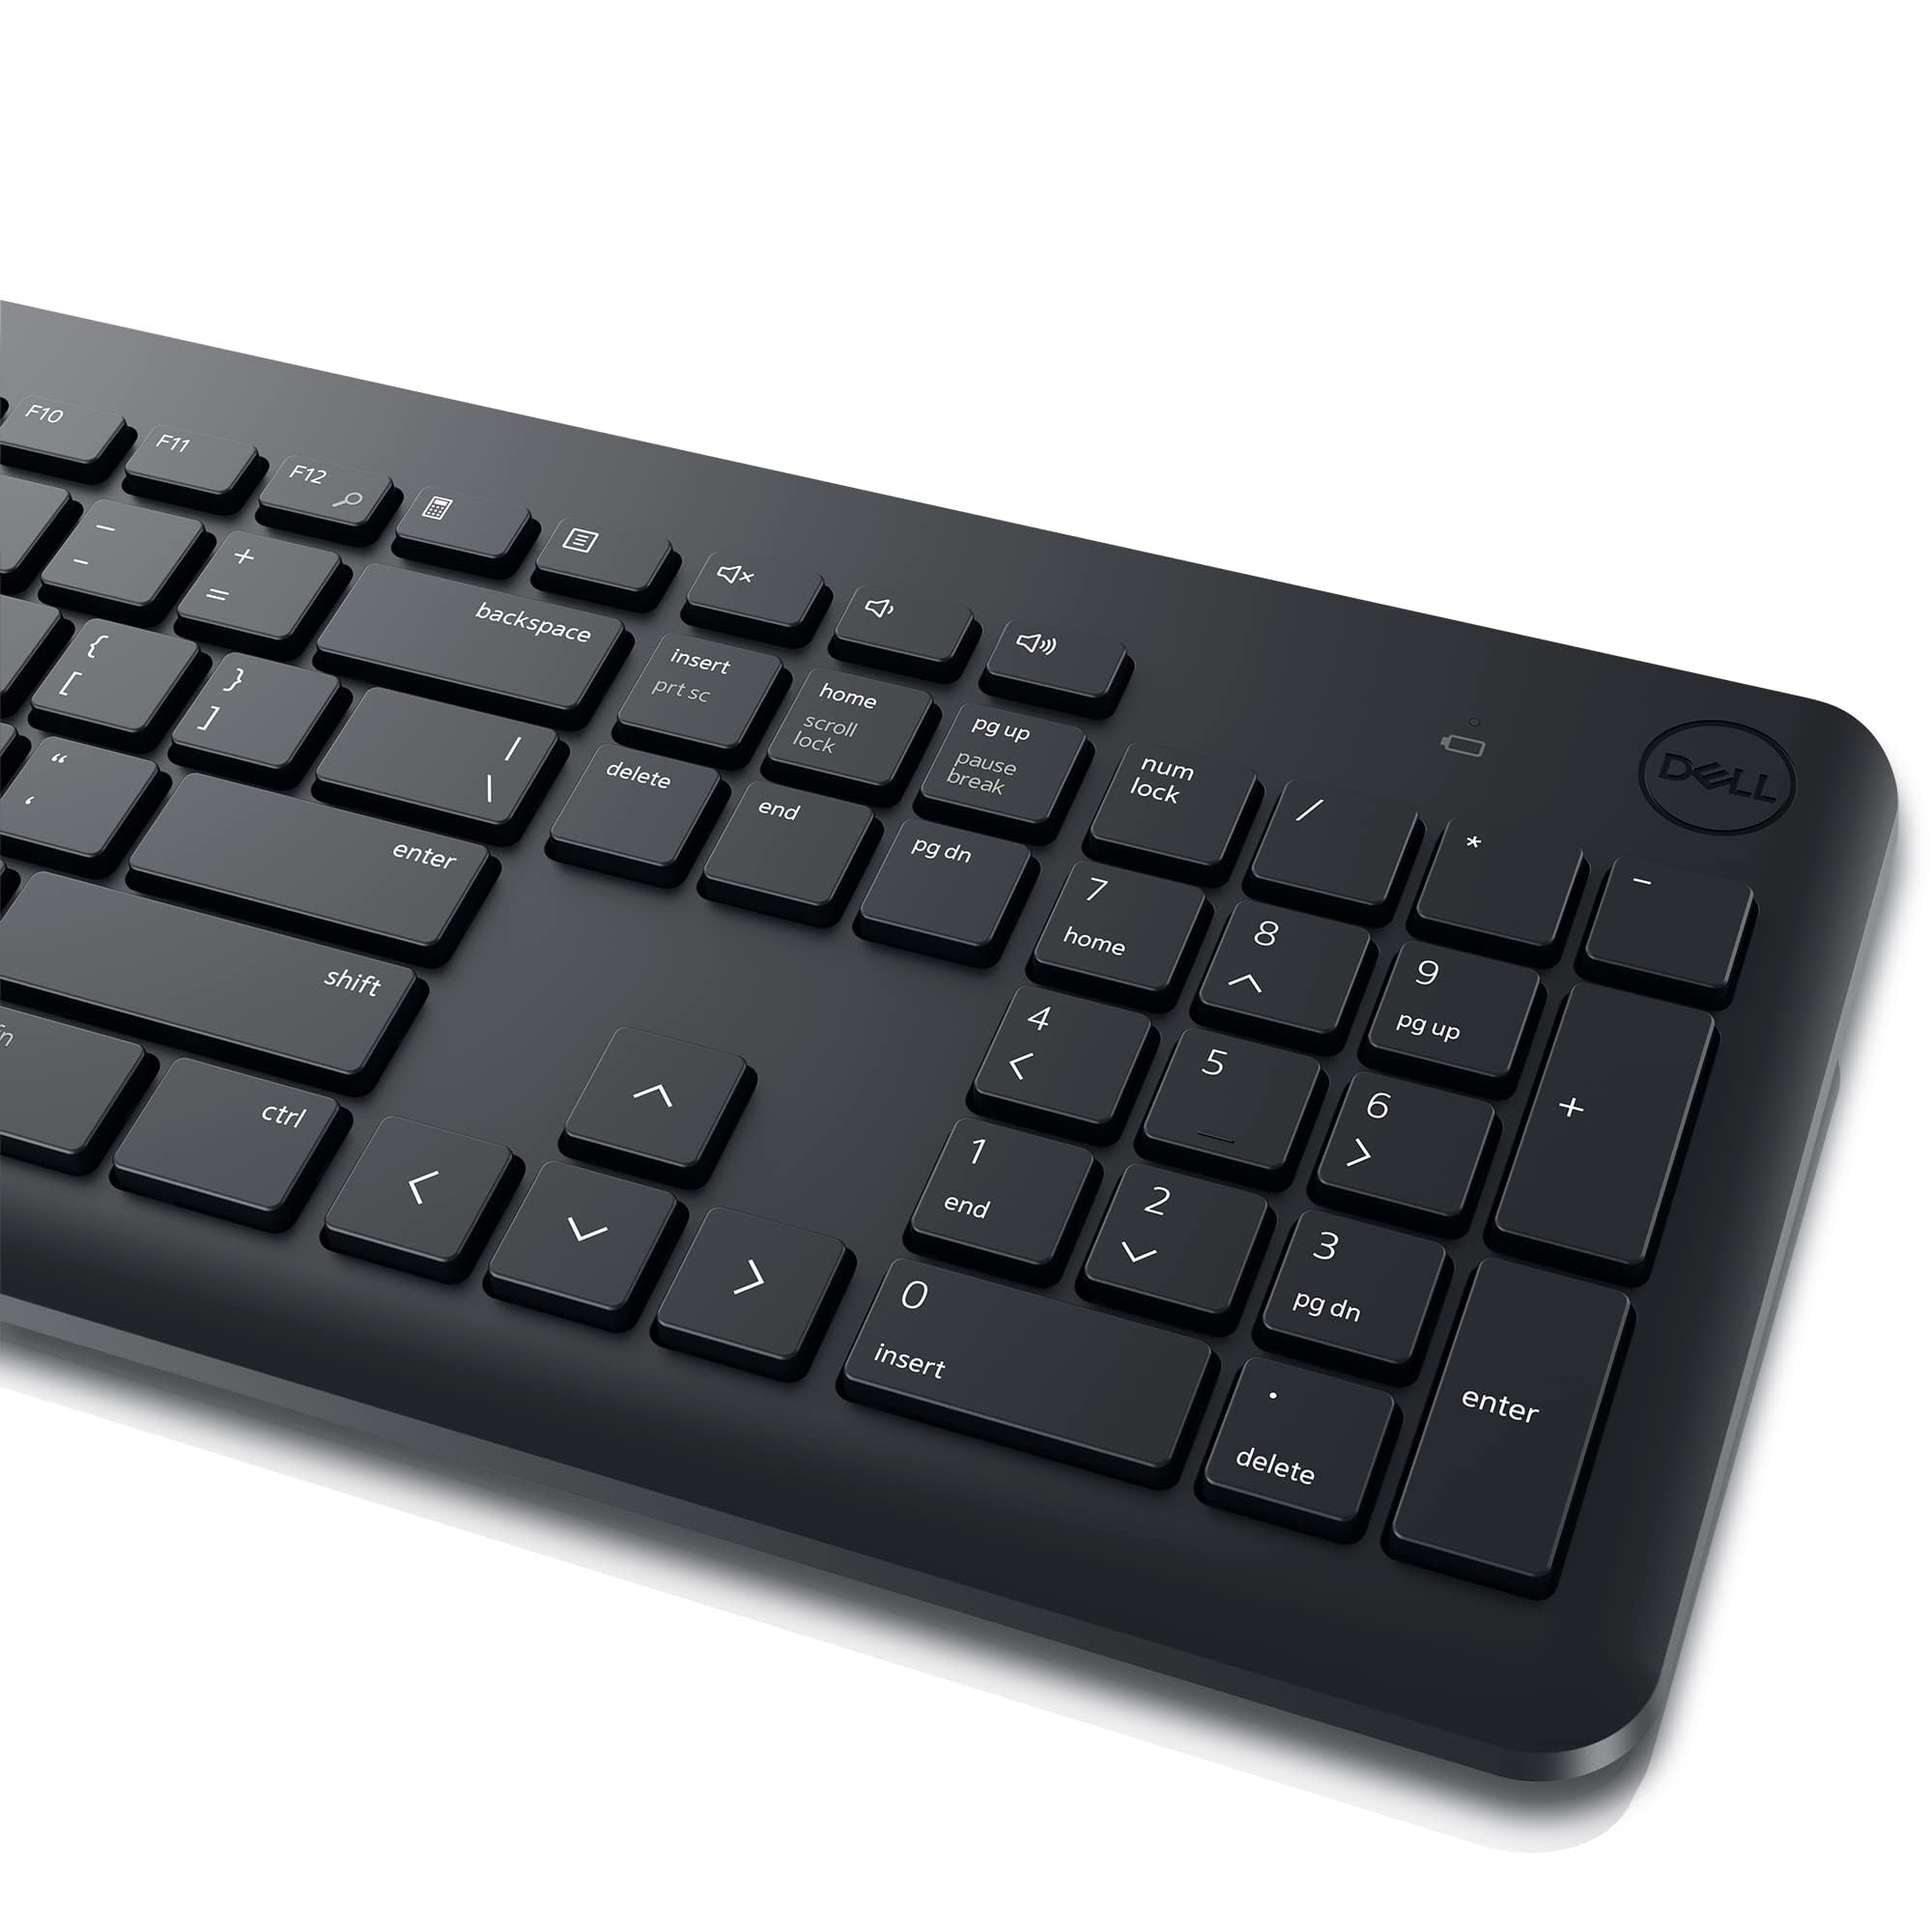 Dell Wireless Keyboard and Mouse - KM3322W, Wireless - 2.4GHz, Optical LED Sensor, Mechanical Scroll, Anti-Fade Plunger Keys, 6 Multimedia Keys, Tilt Leg - Black